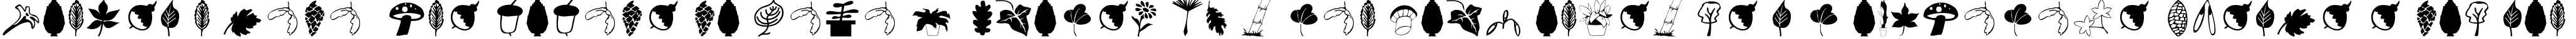 Пример написания шрифтом Plants текста на испанском